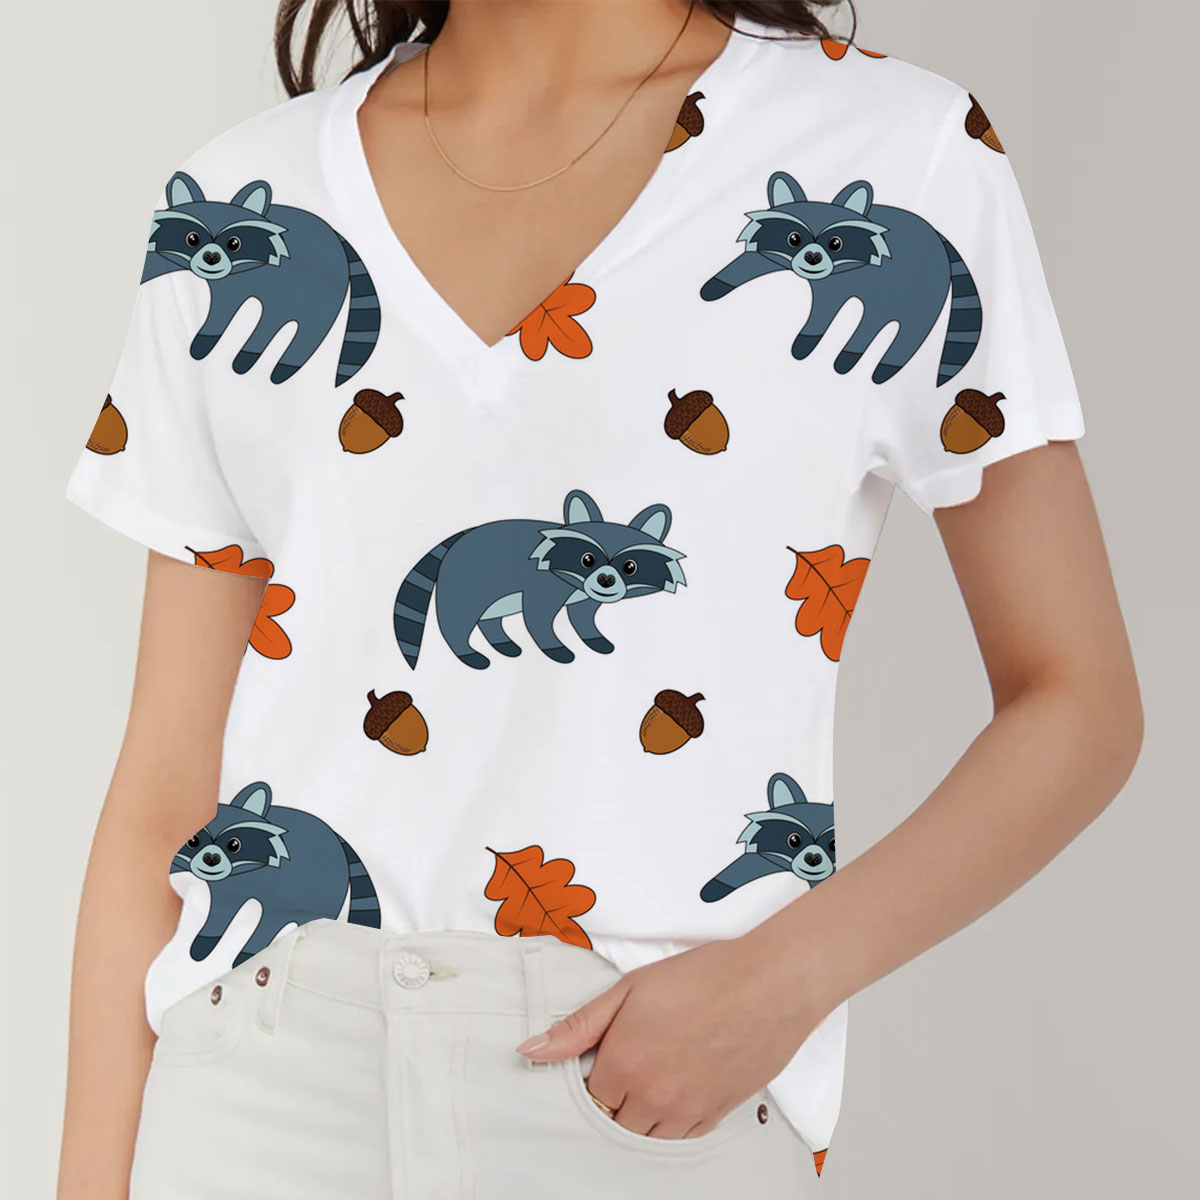 Autumn Leaf Raccoon V-Neck Women's T-Shirt